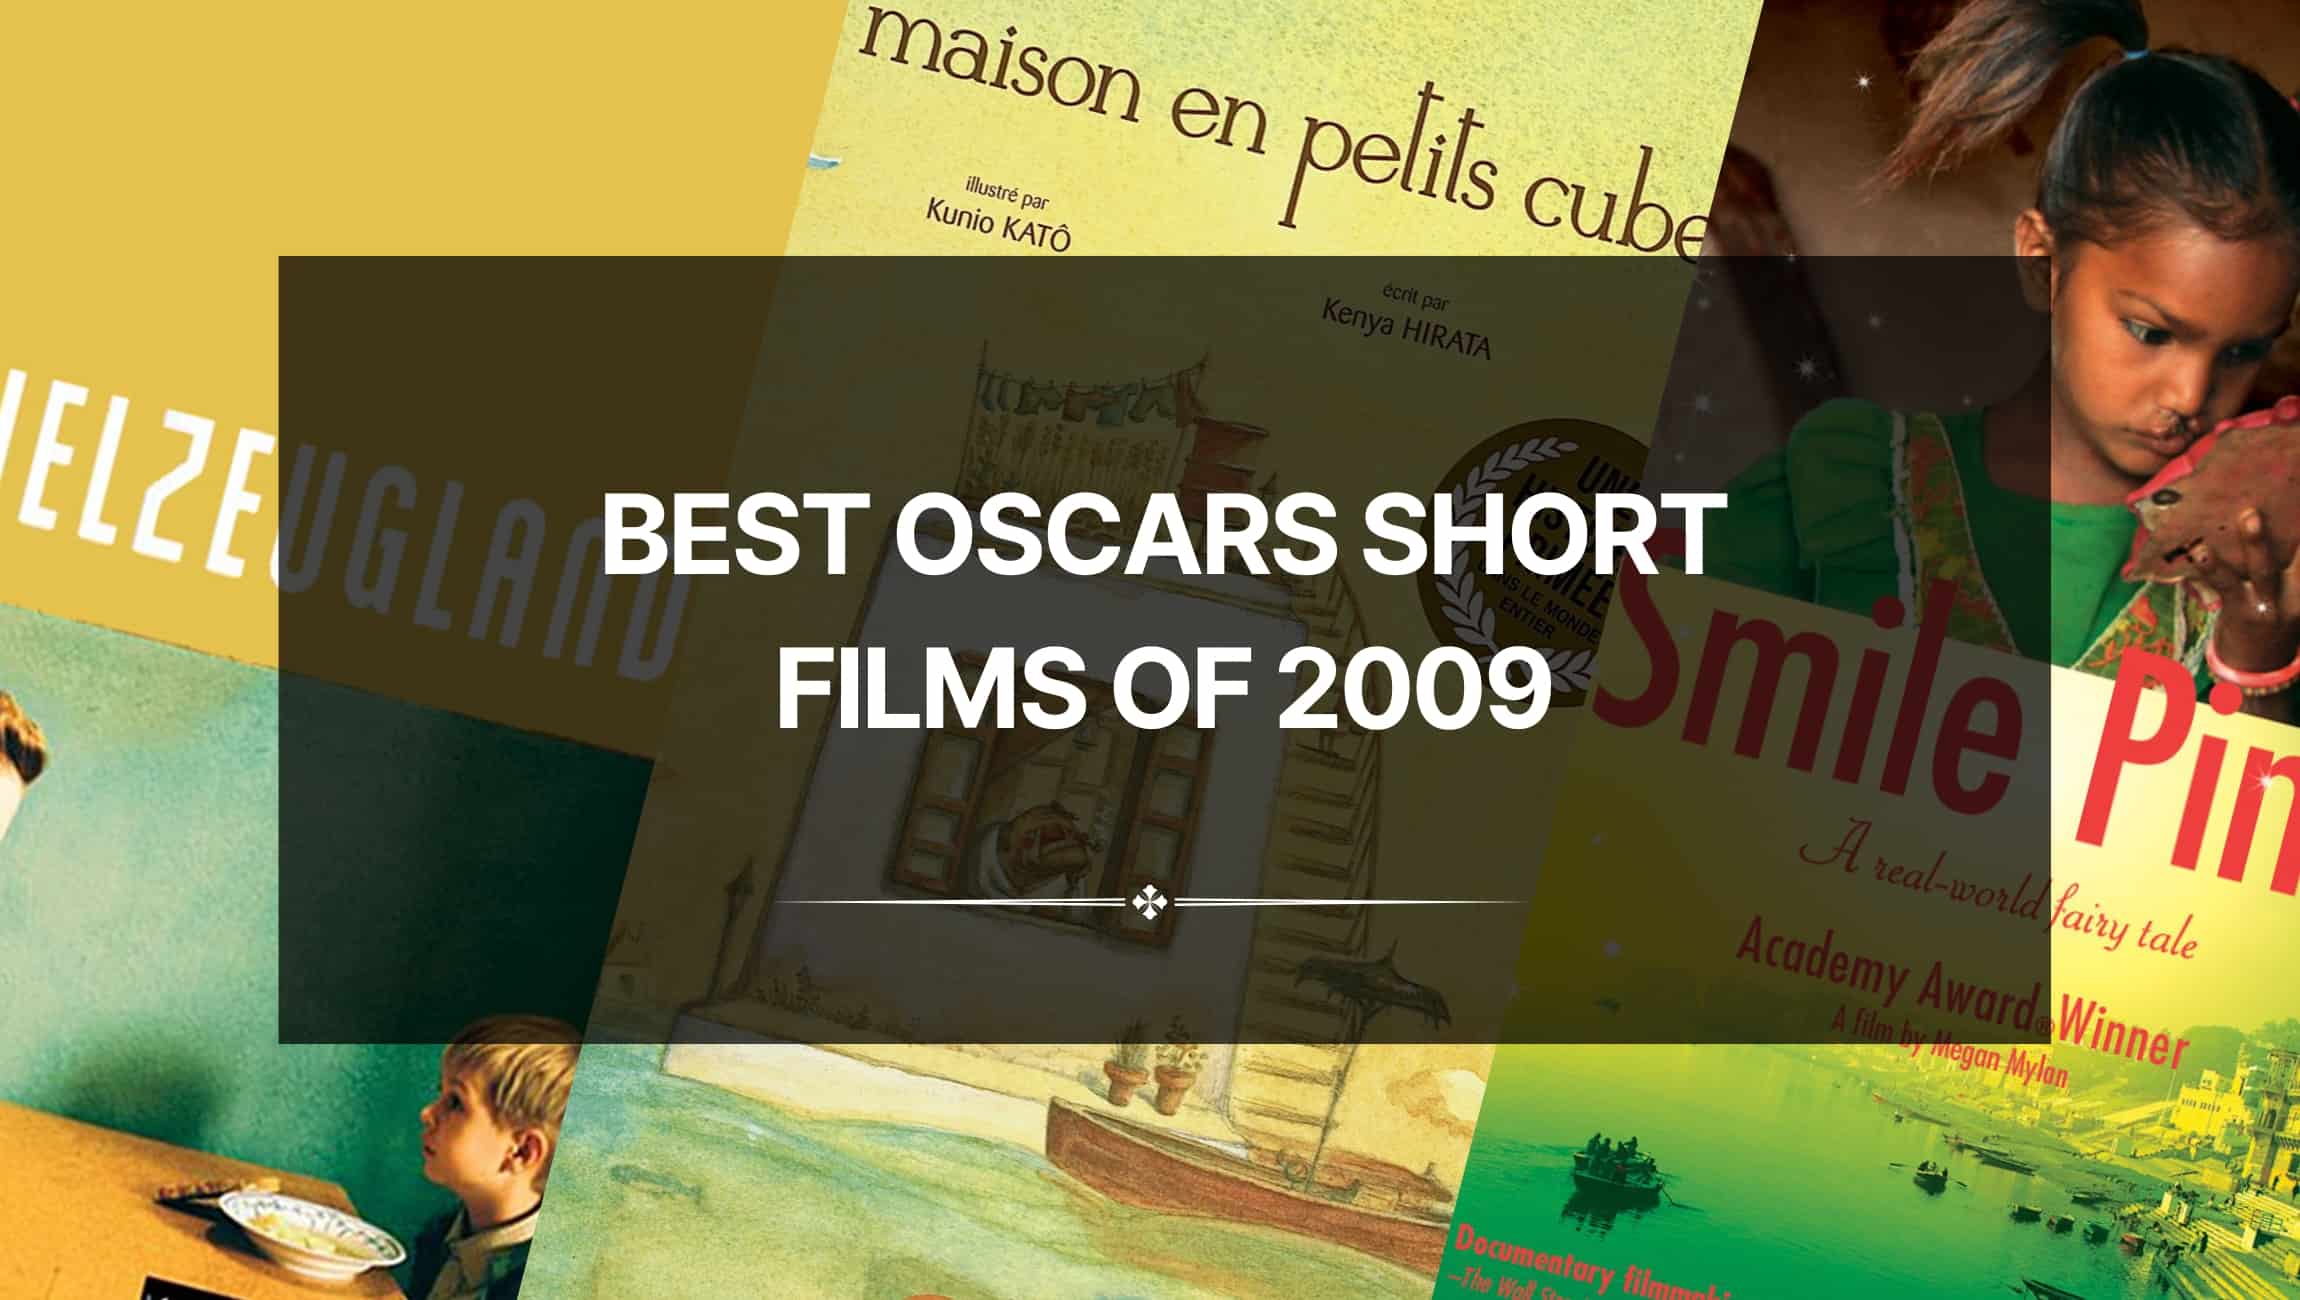 Best Oscars Short Films of 2009